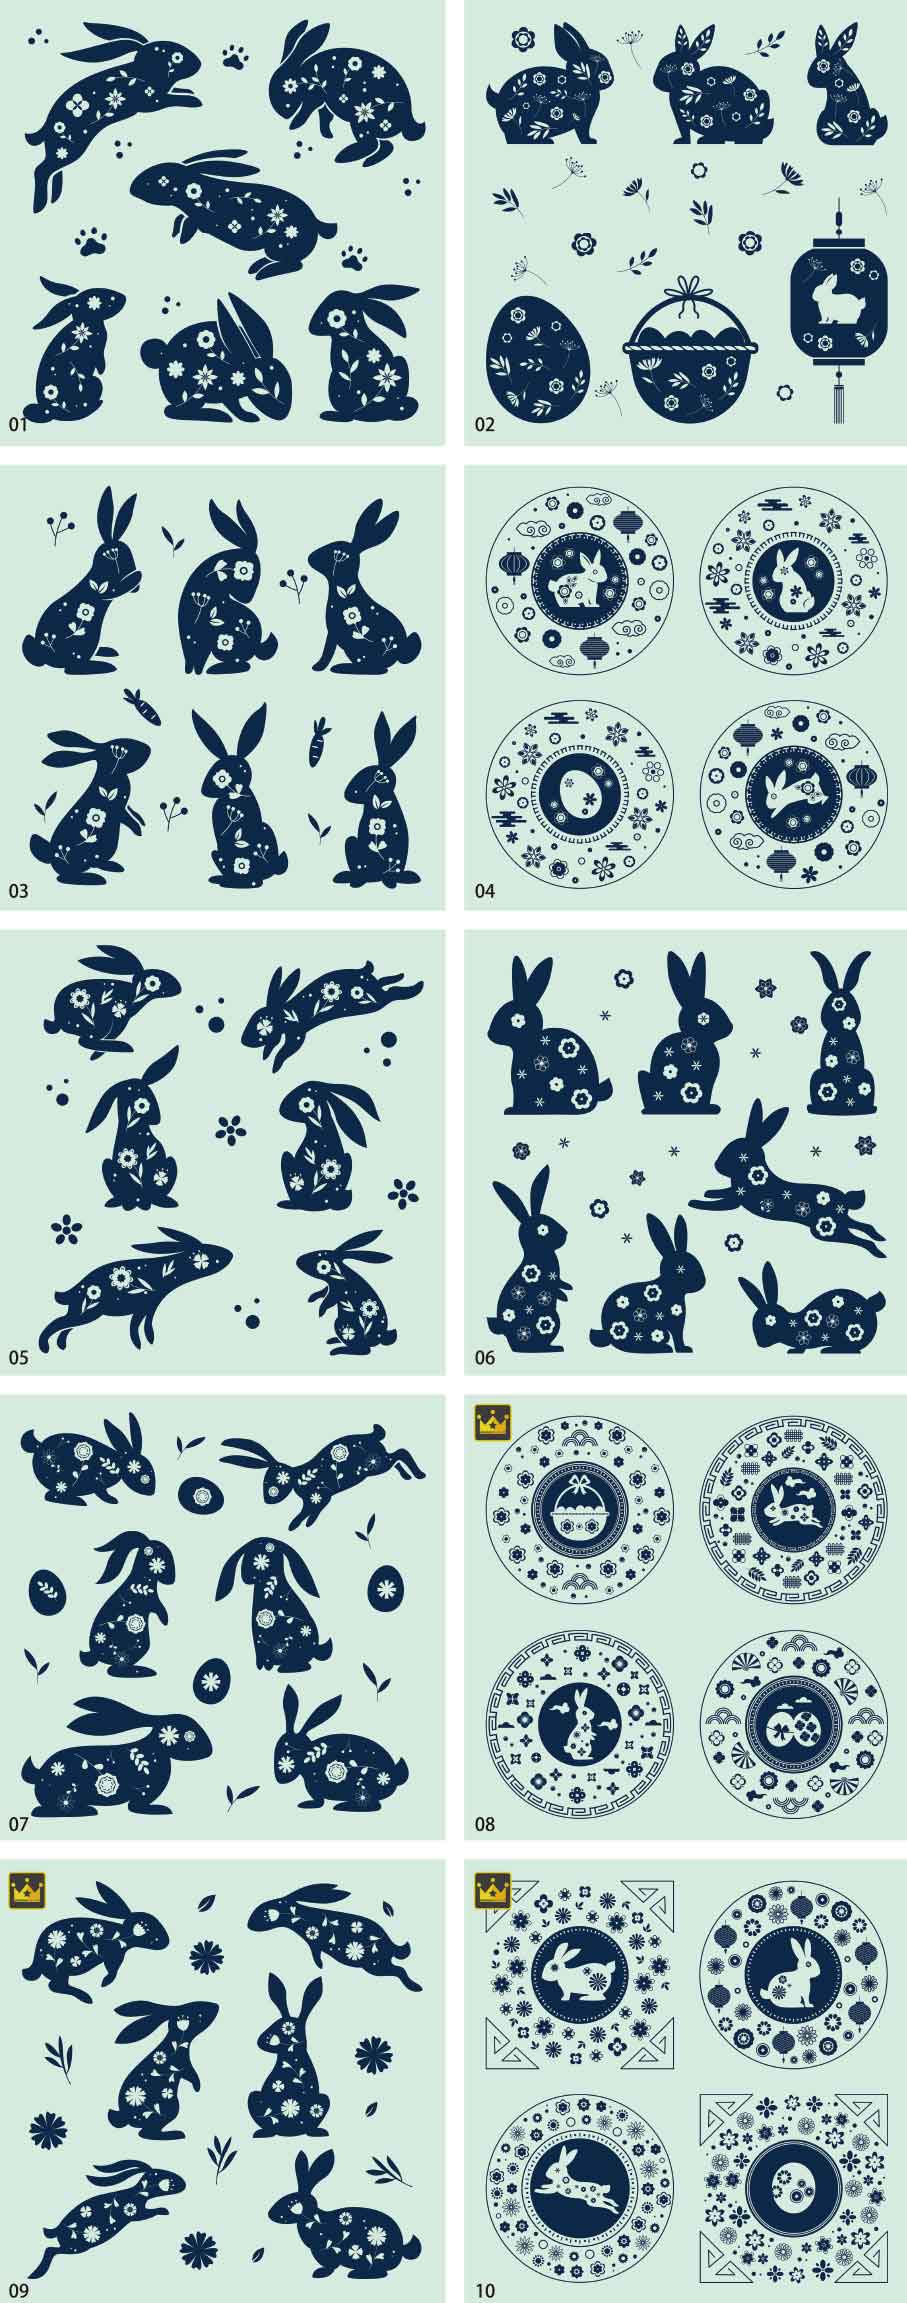 Creative rabbit illustration collection